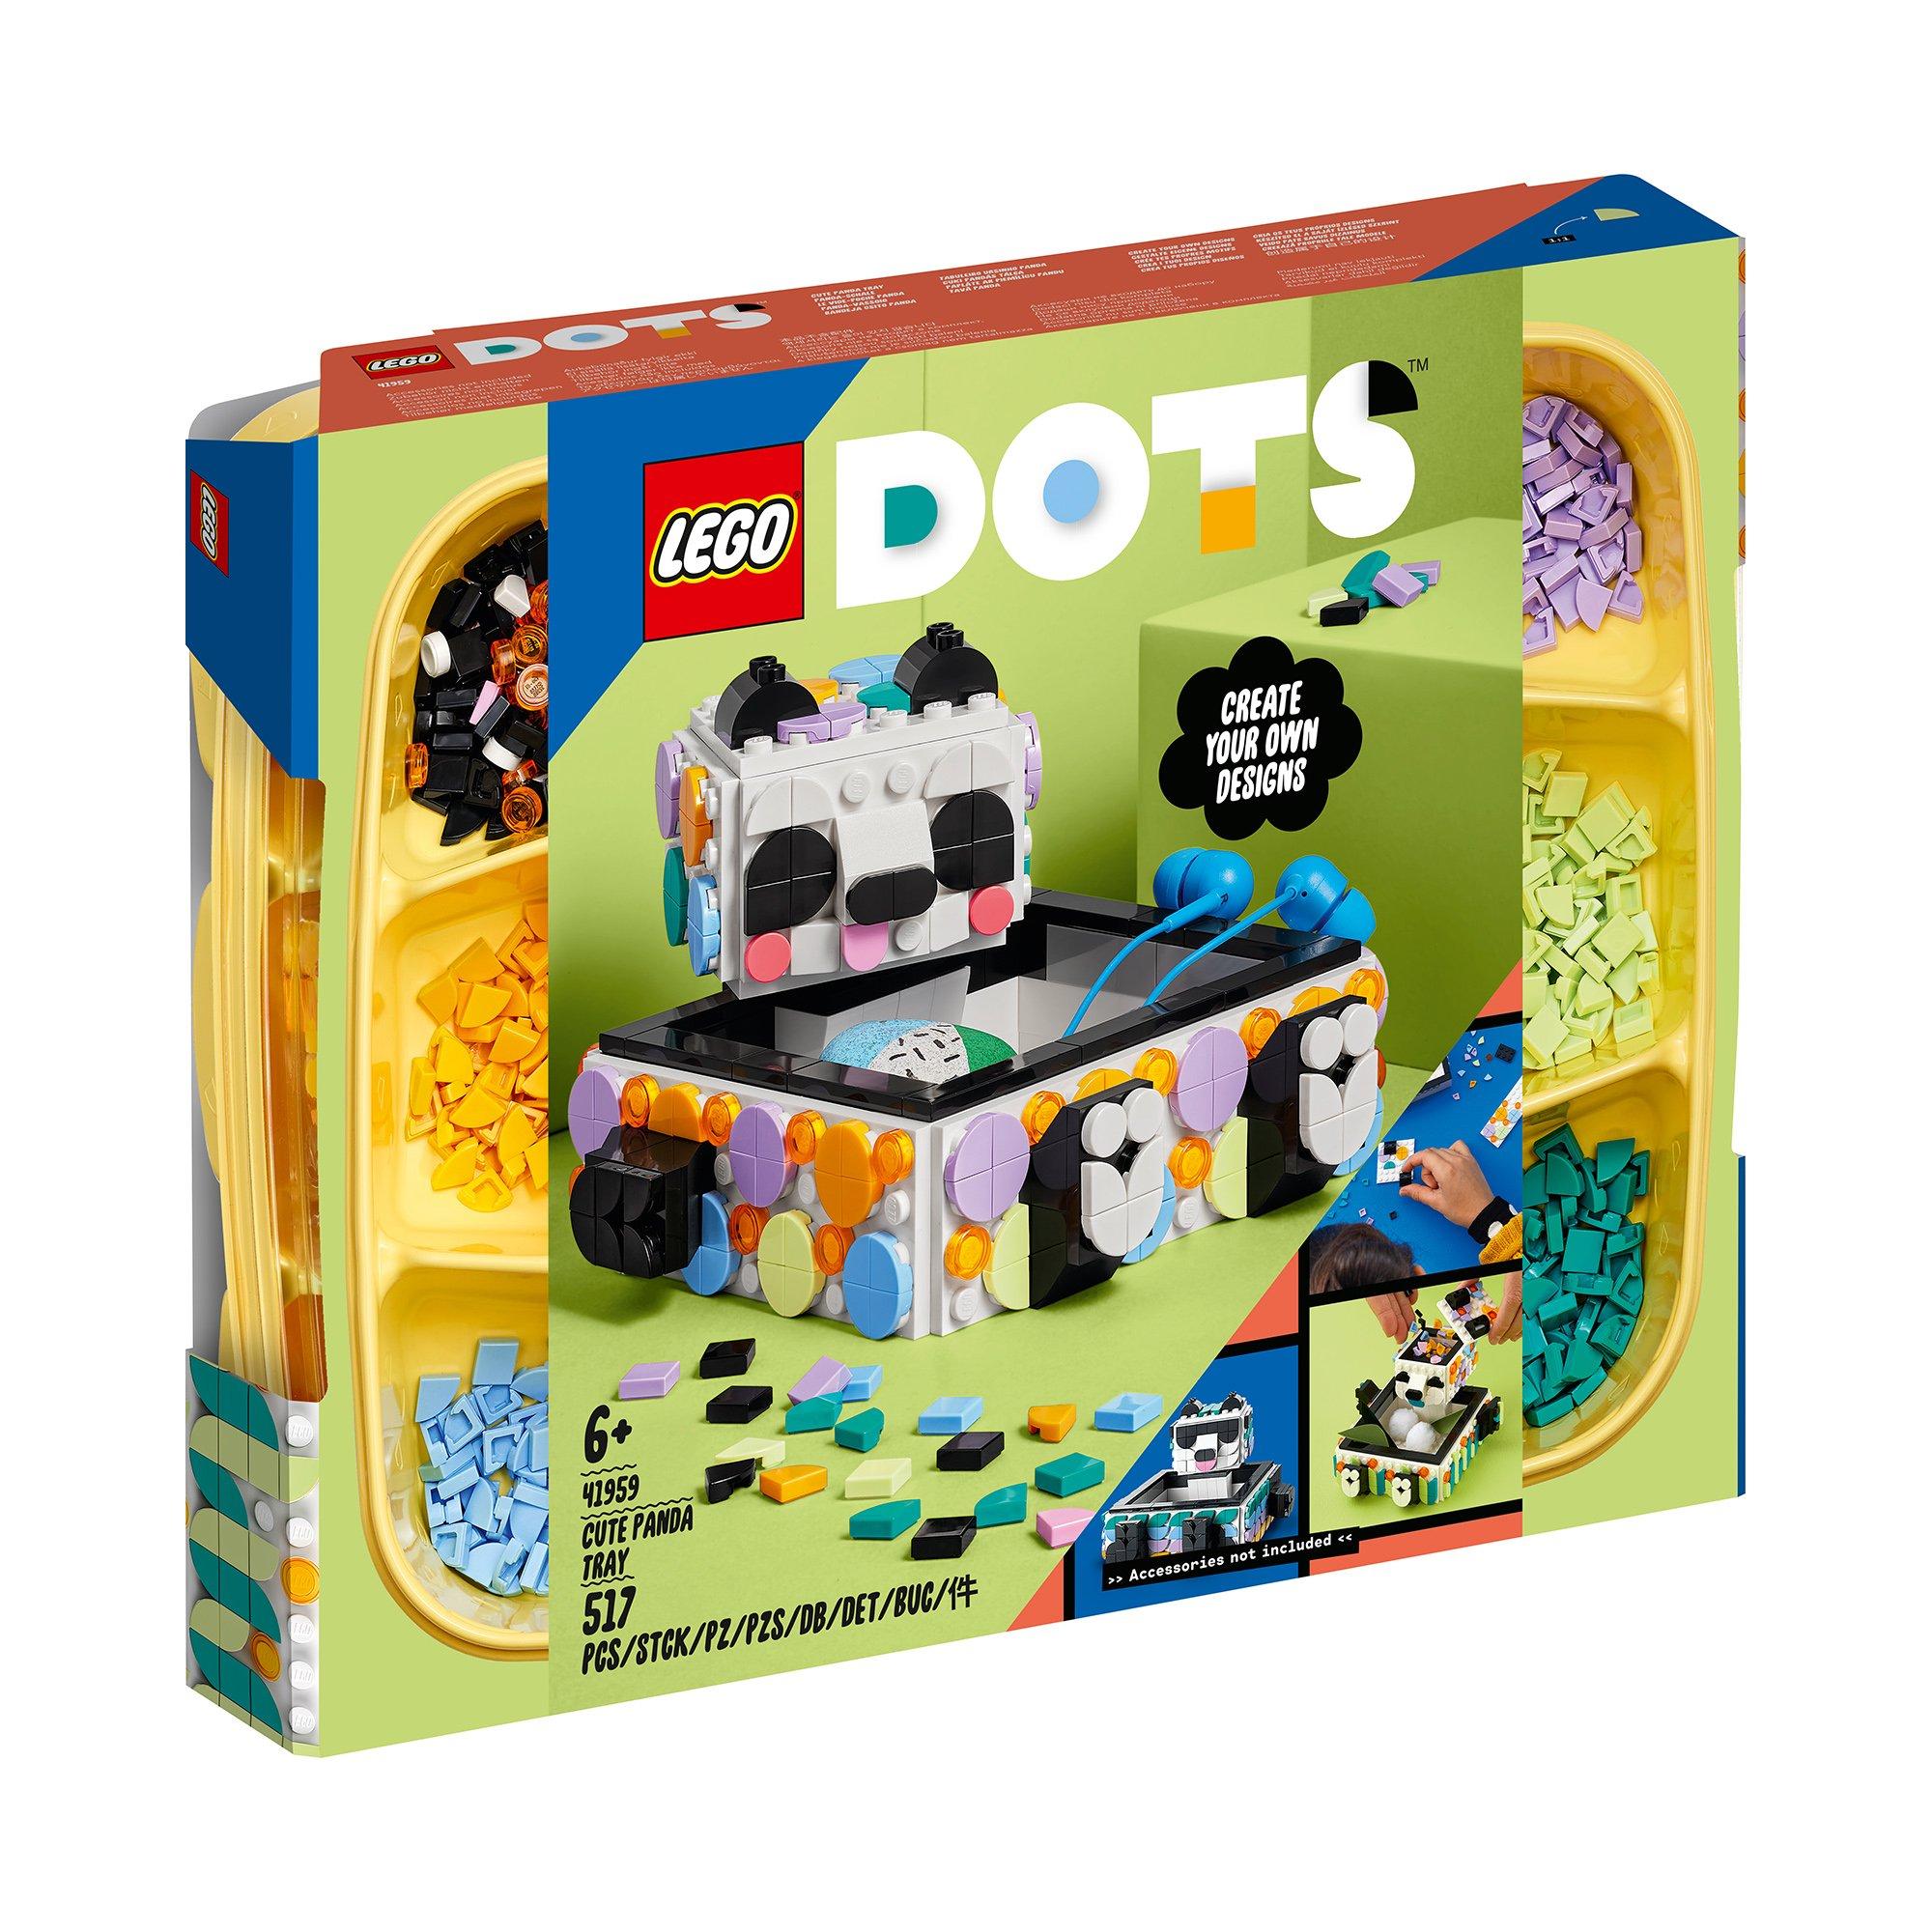 vide-poche LEGO | acheter 41959 MANOR en Le Panda ligne -